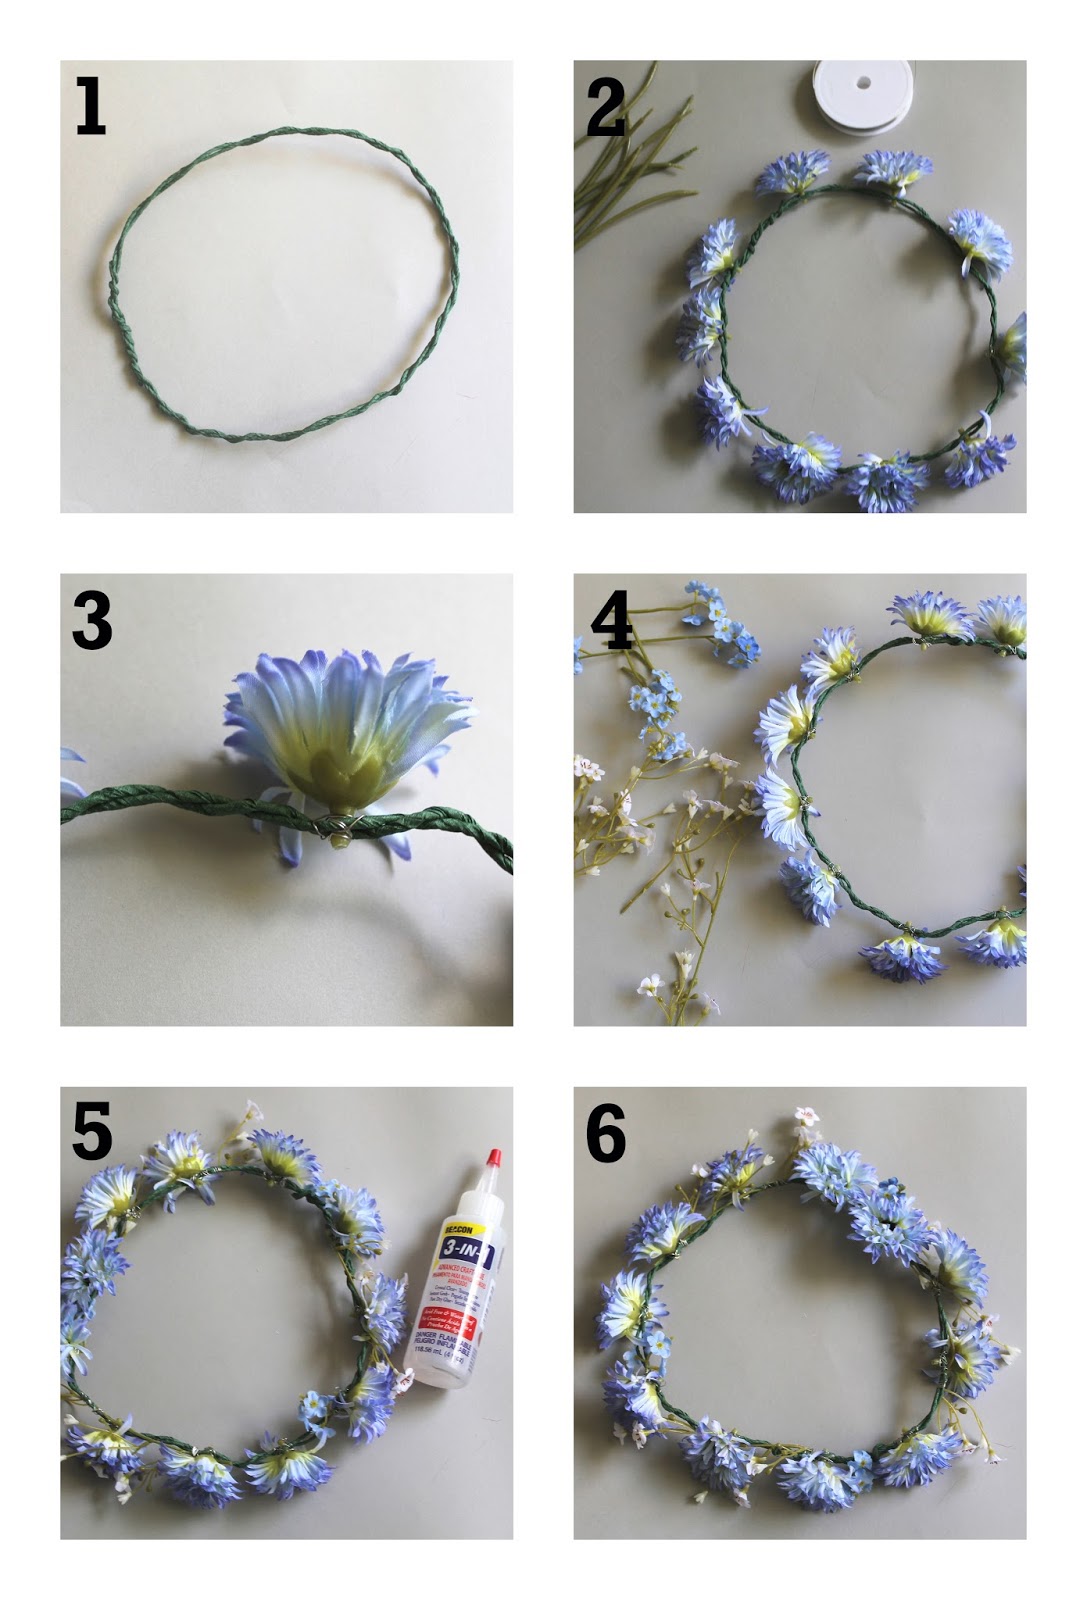 How do you make a flower crown?